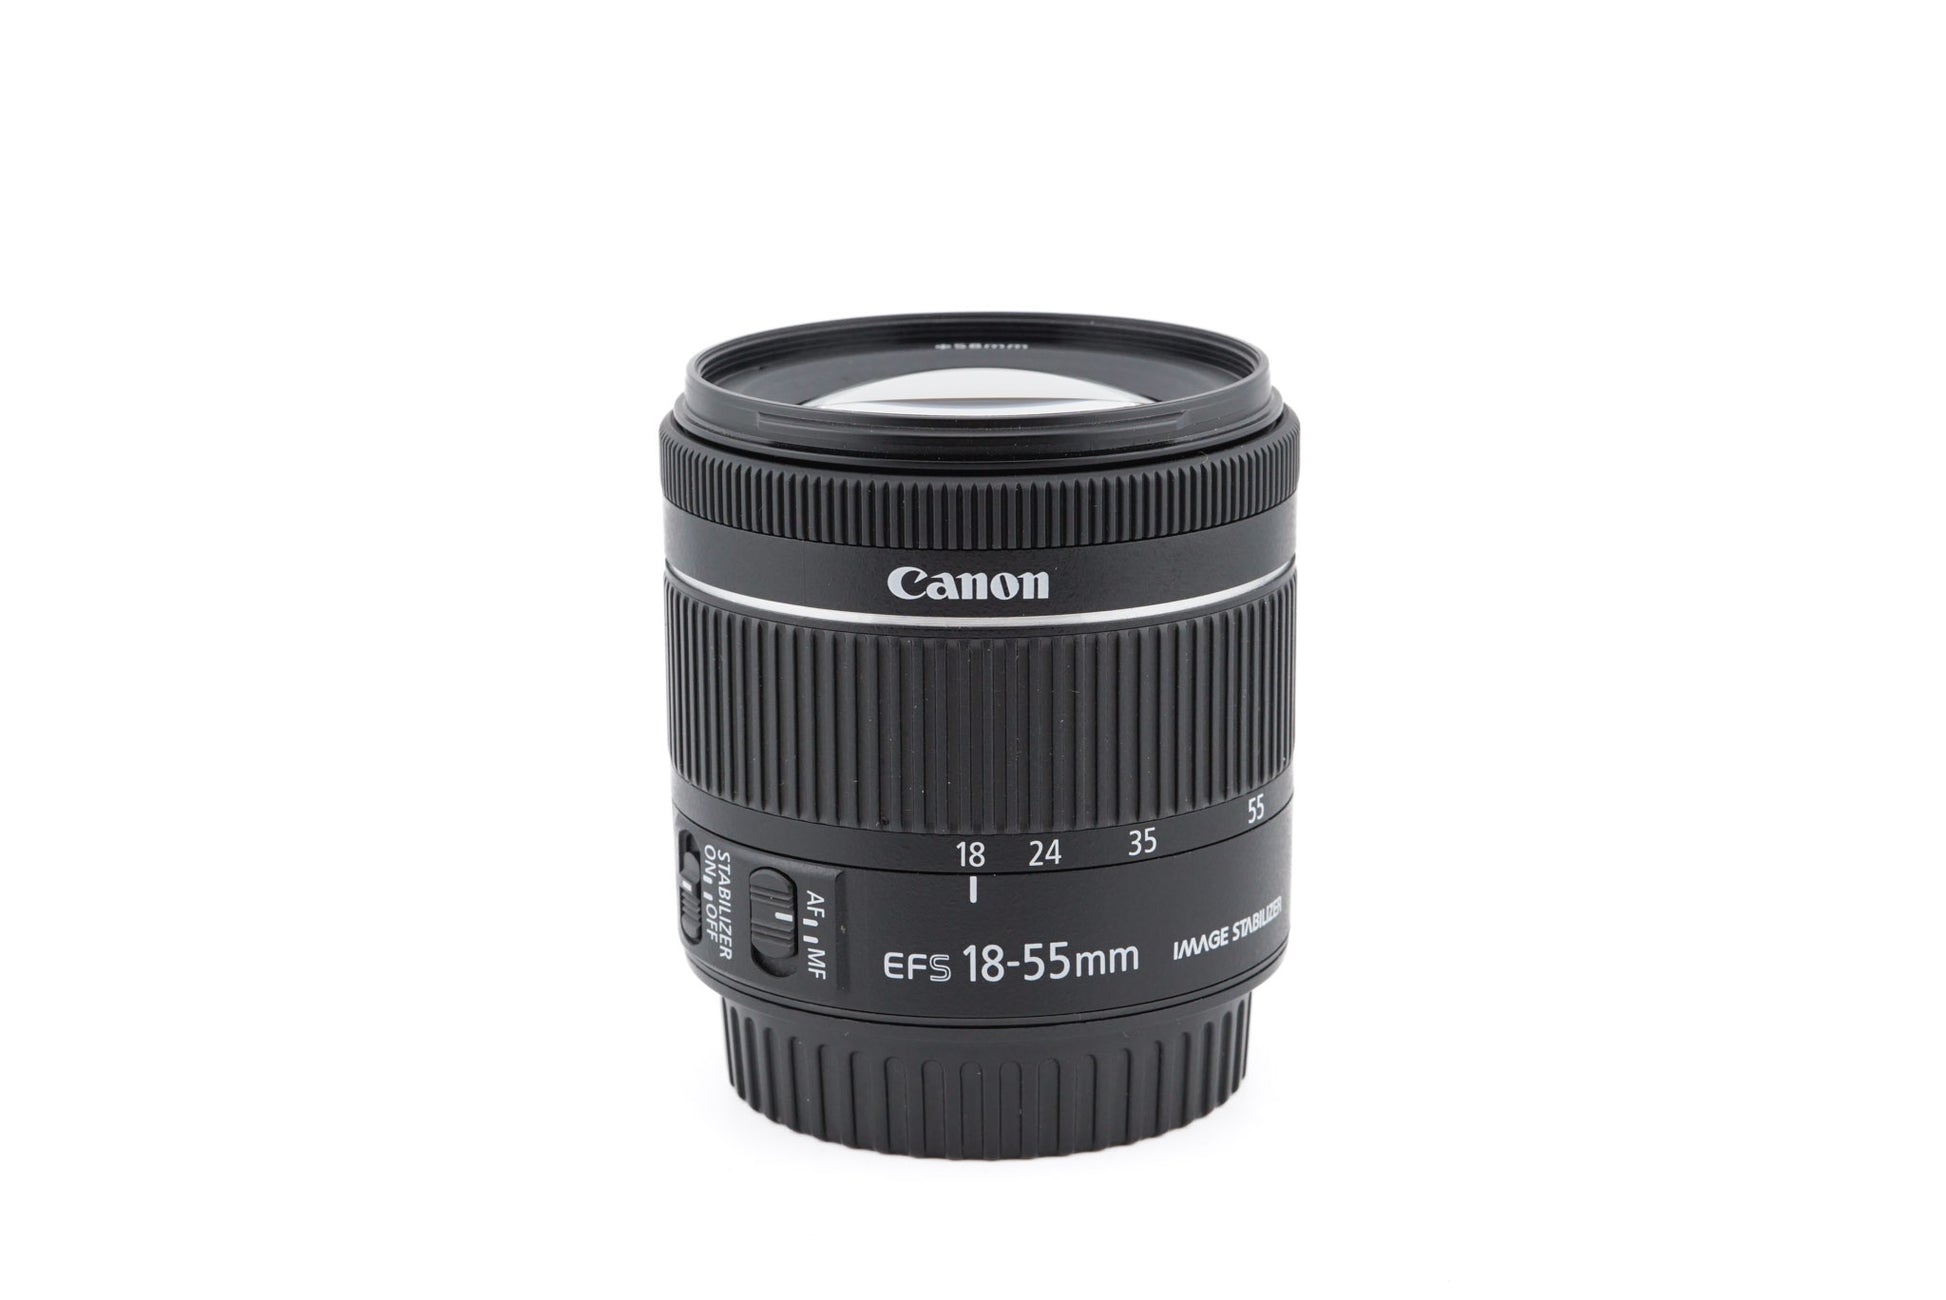 Canon EOS 250D + 18-55mm f4-5.6 IS STM – Kamerastore